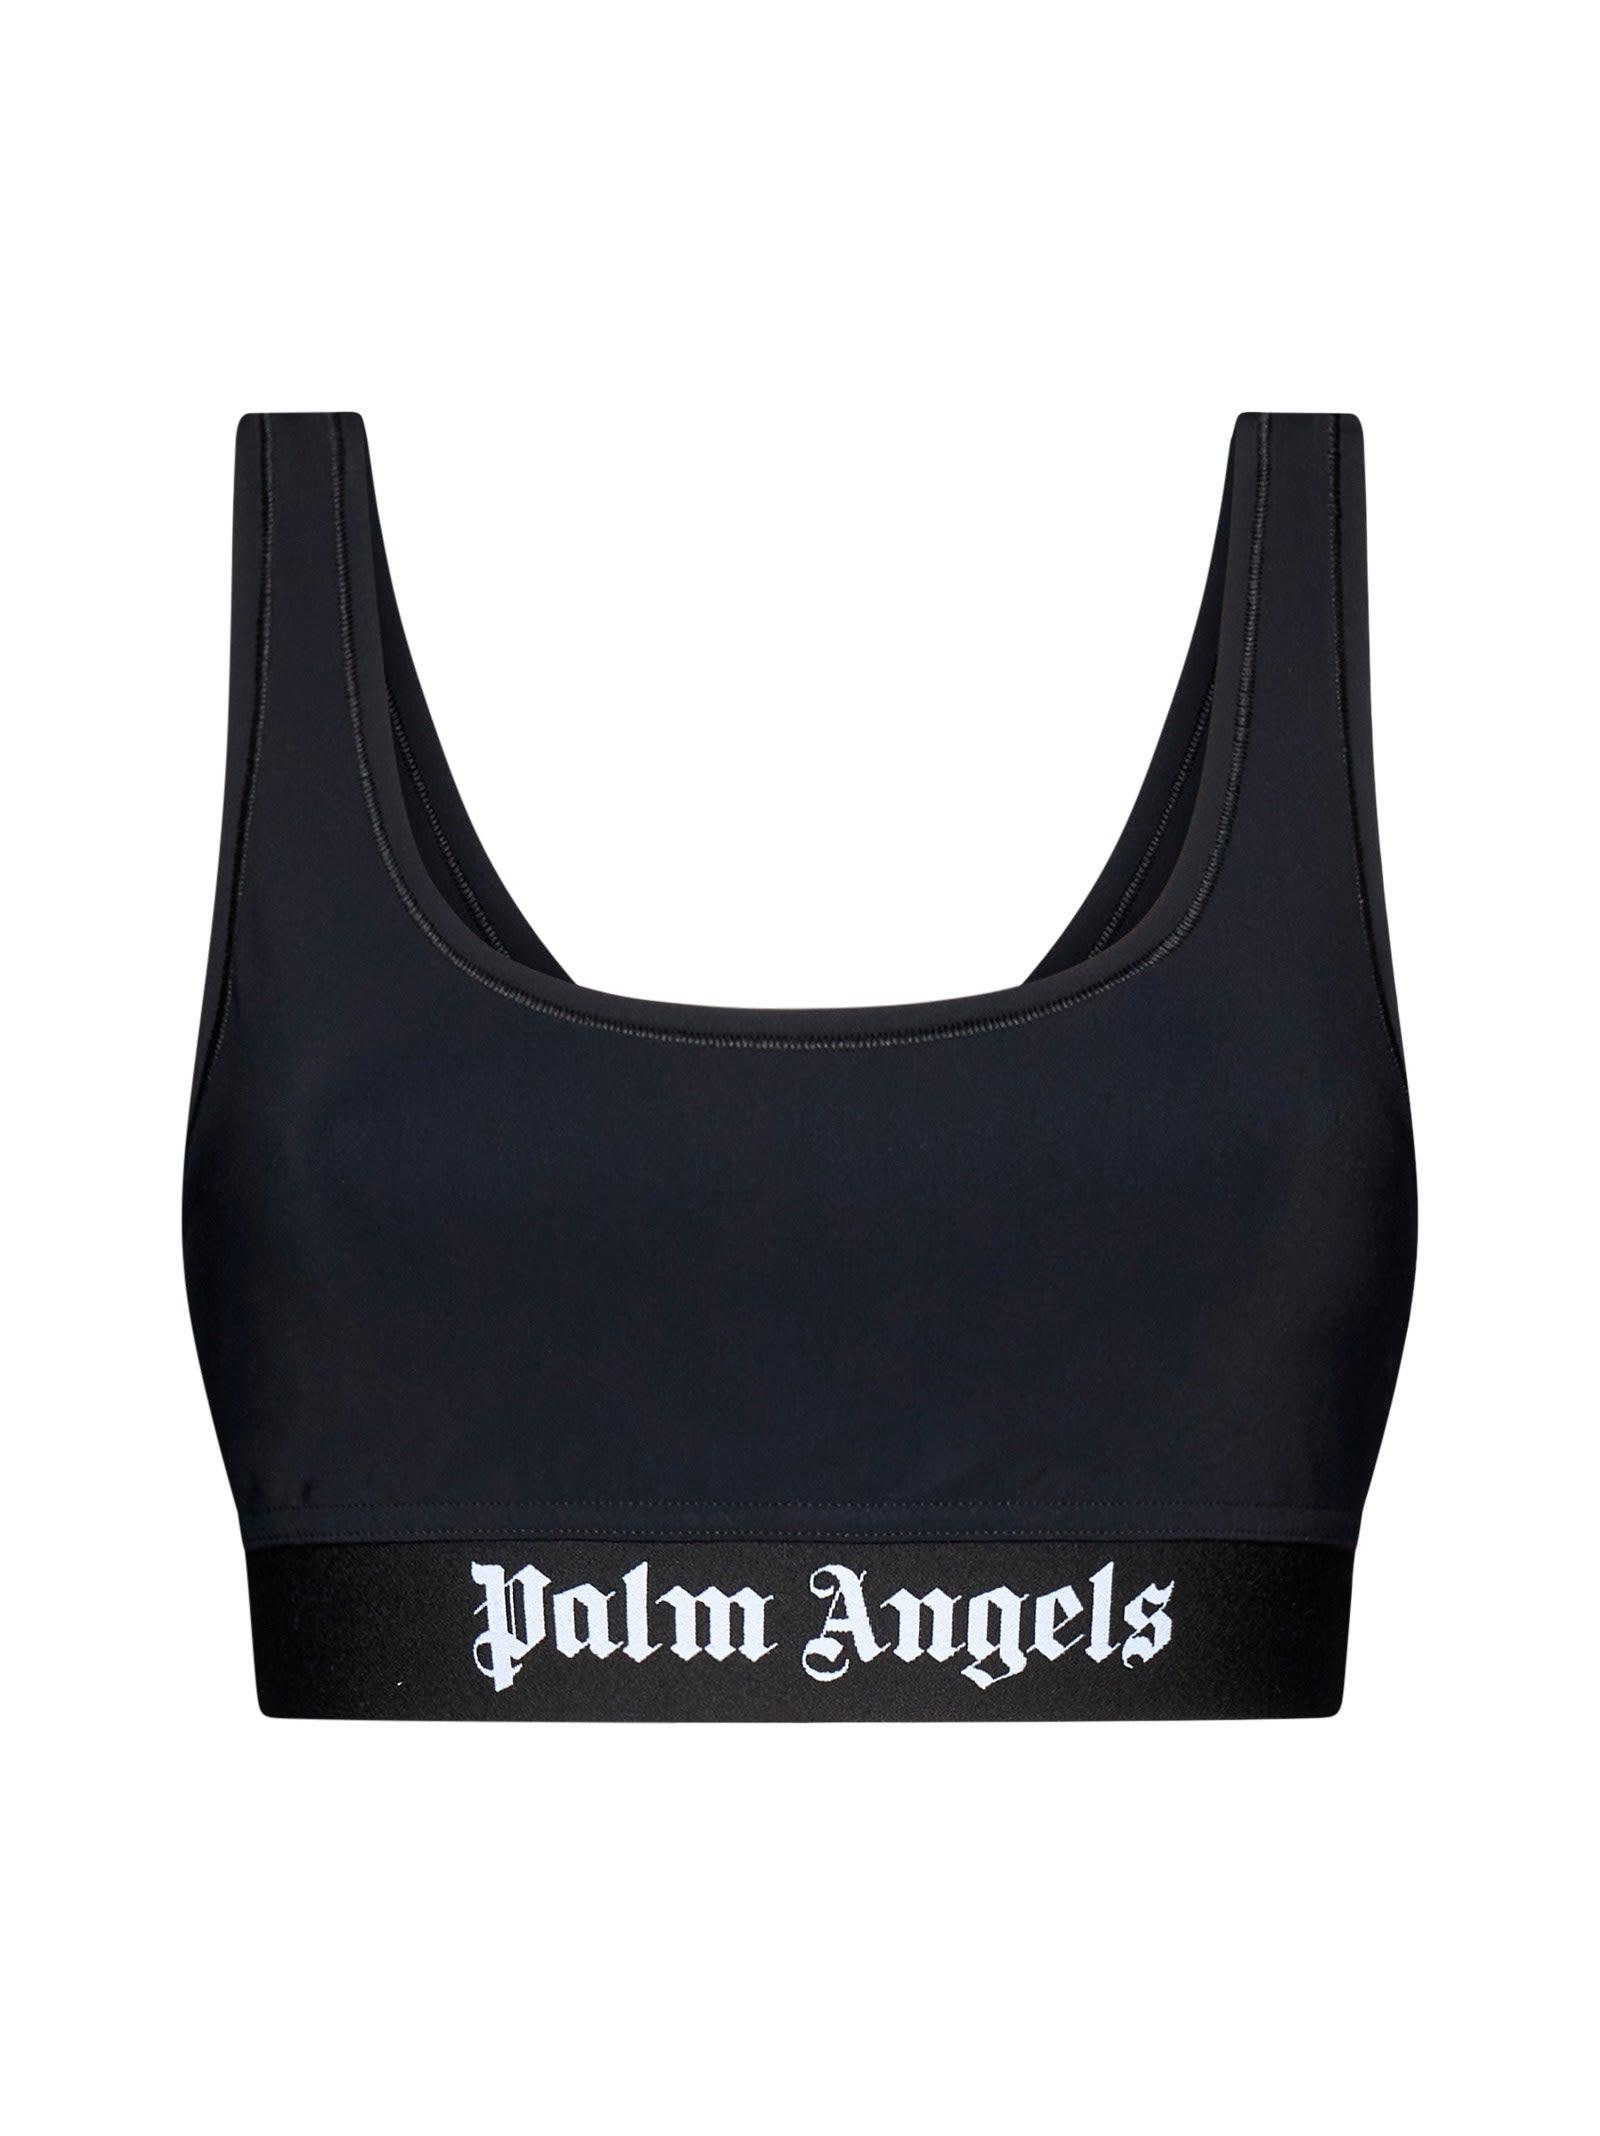 Palm Angels Black Sports Bra With White Logo - Women – Piano Luigi